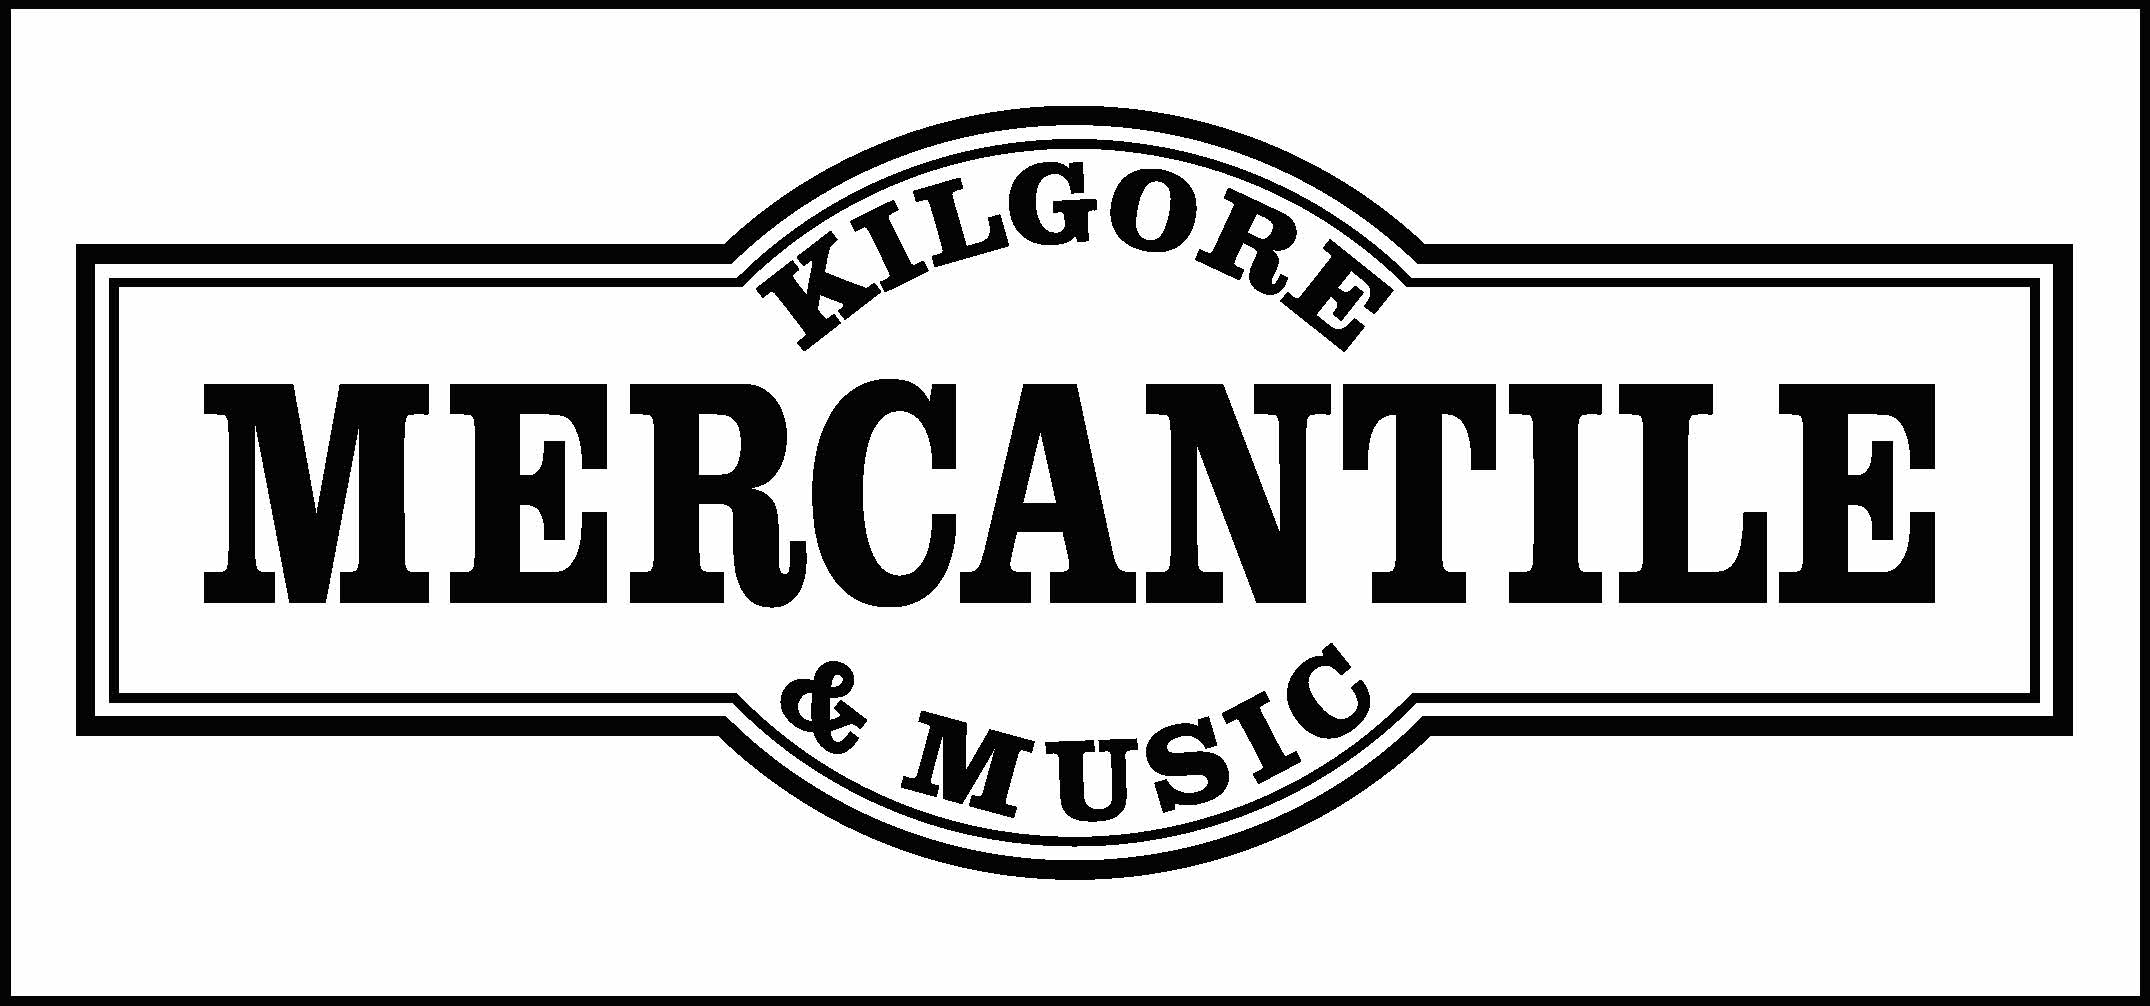 Kilgore Mercantile & Music